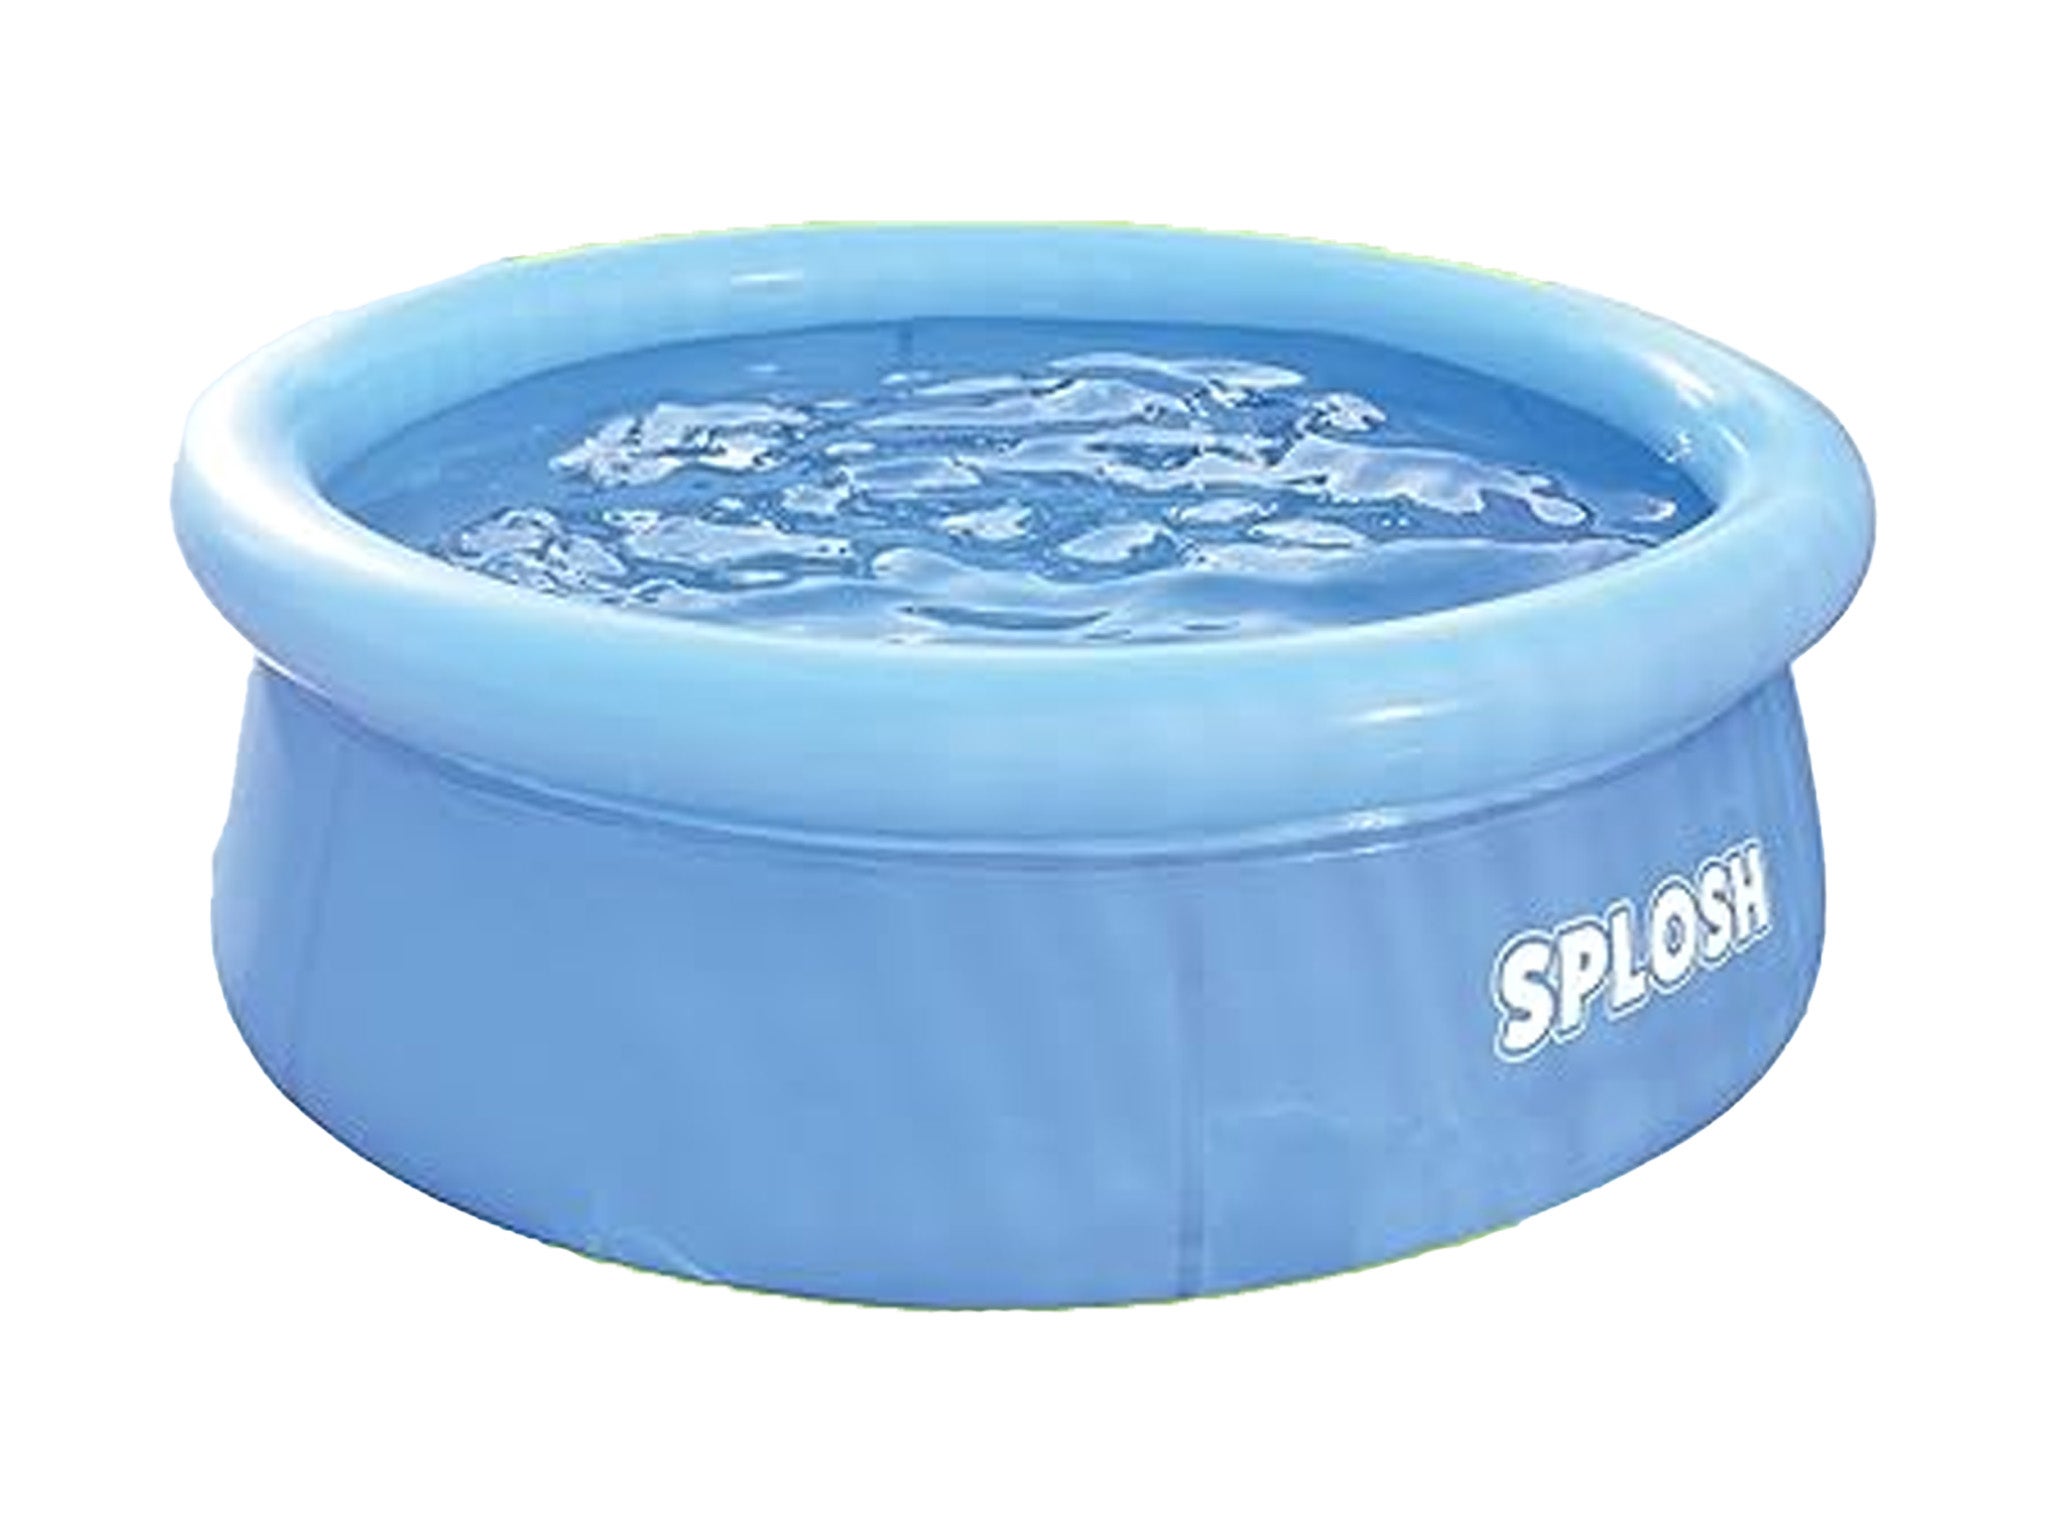 Splosh best paddling pools